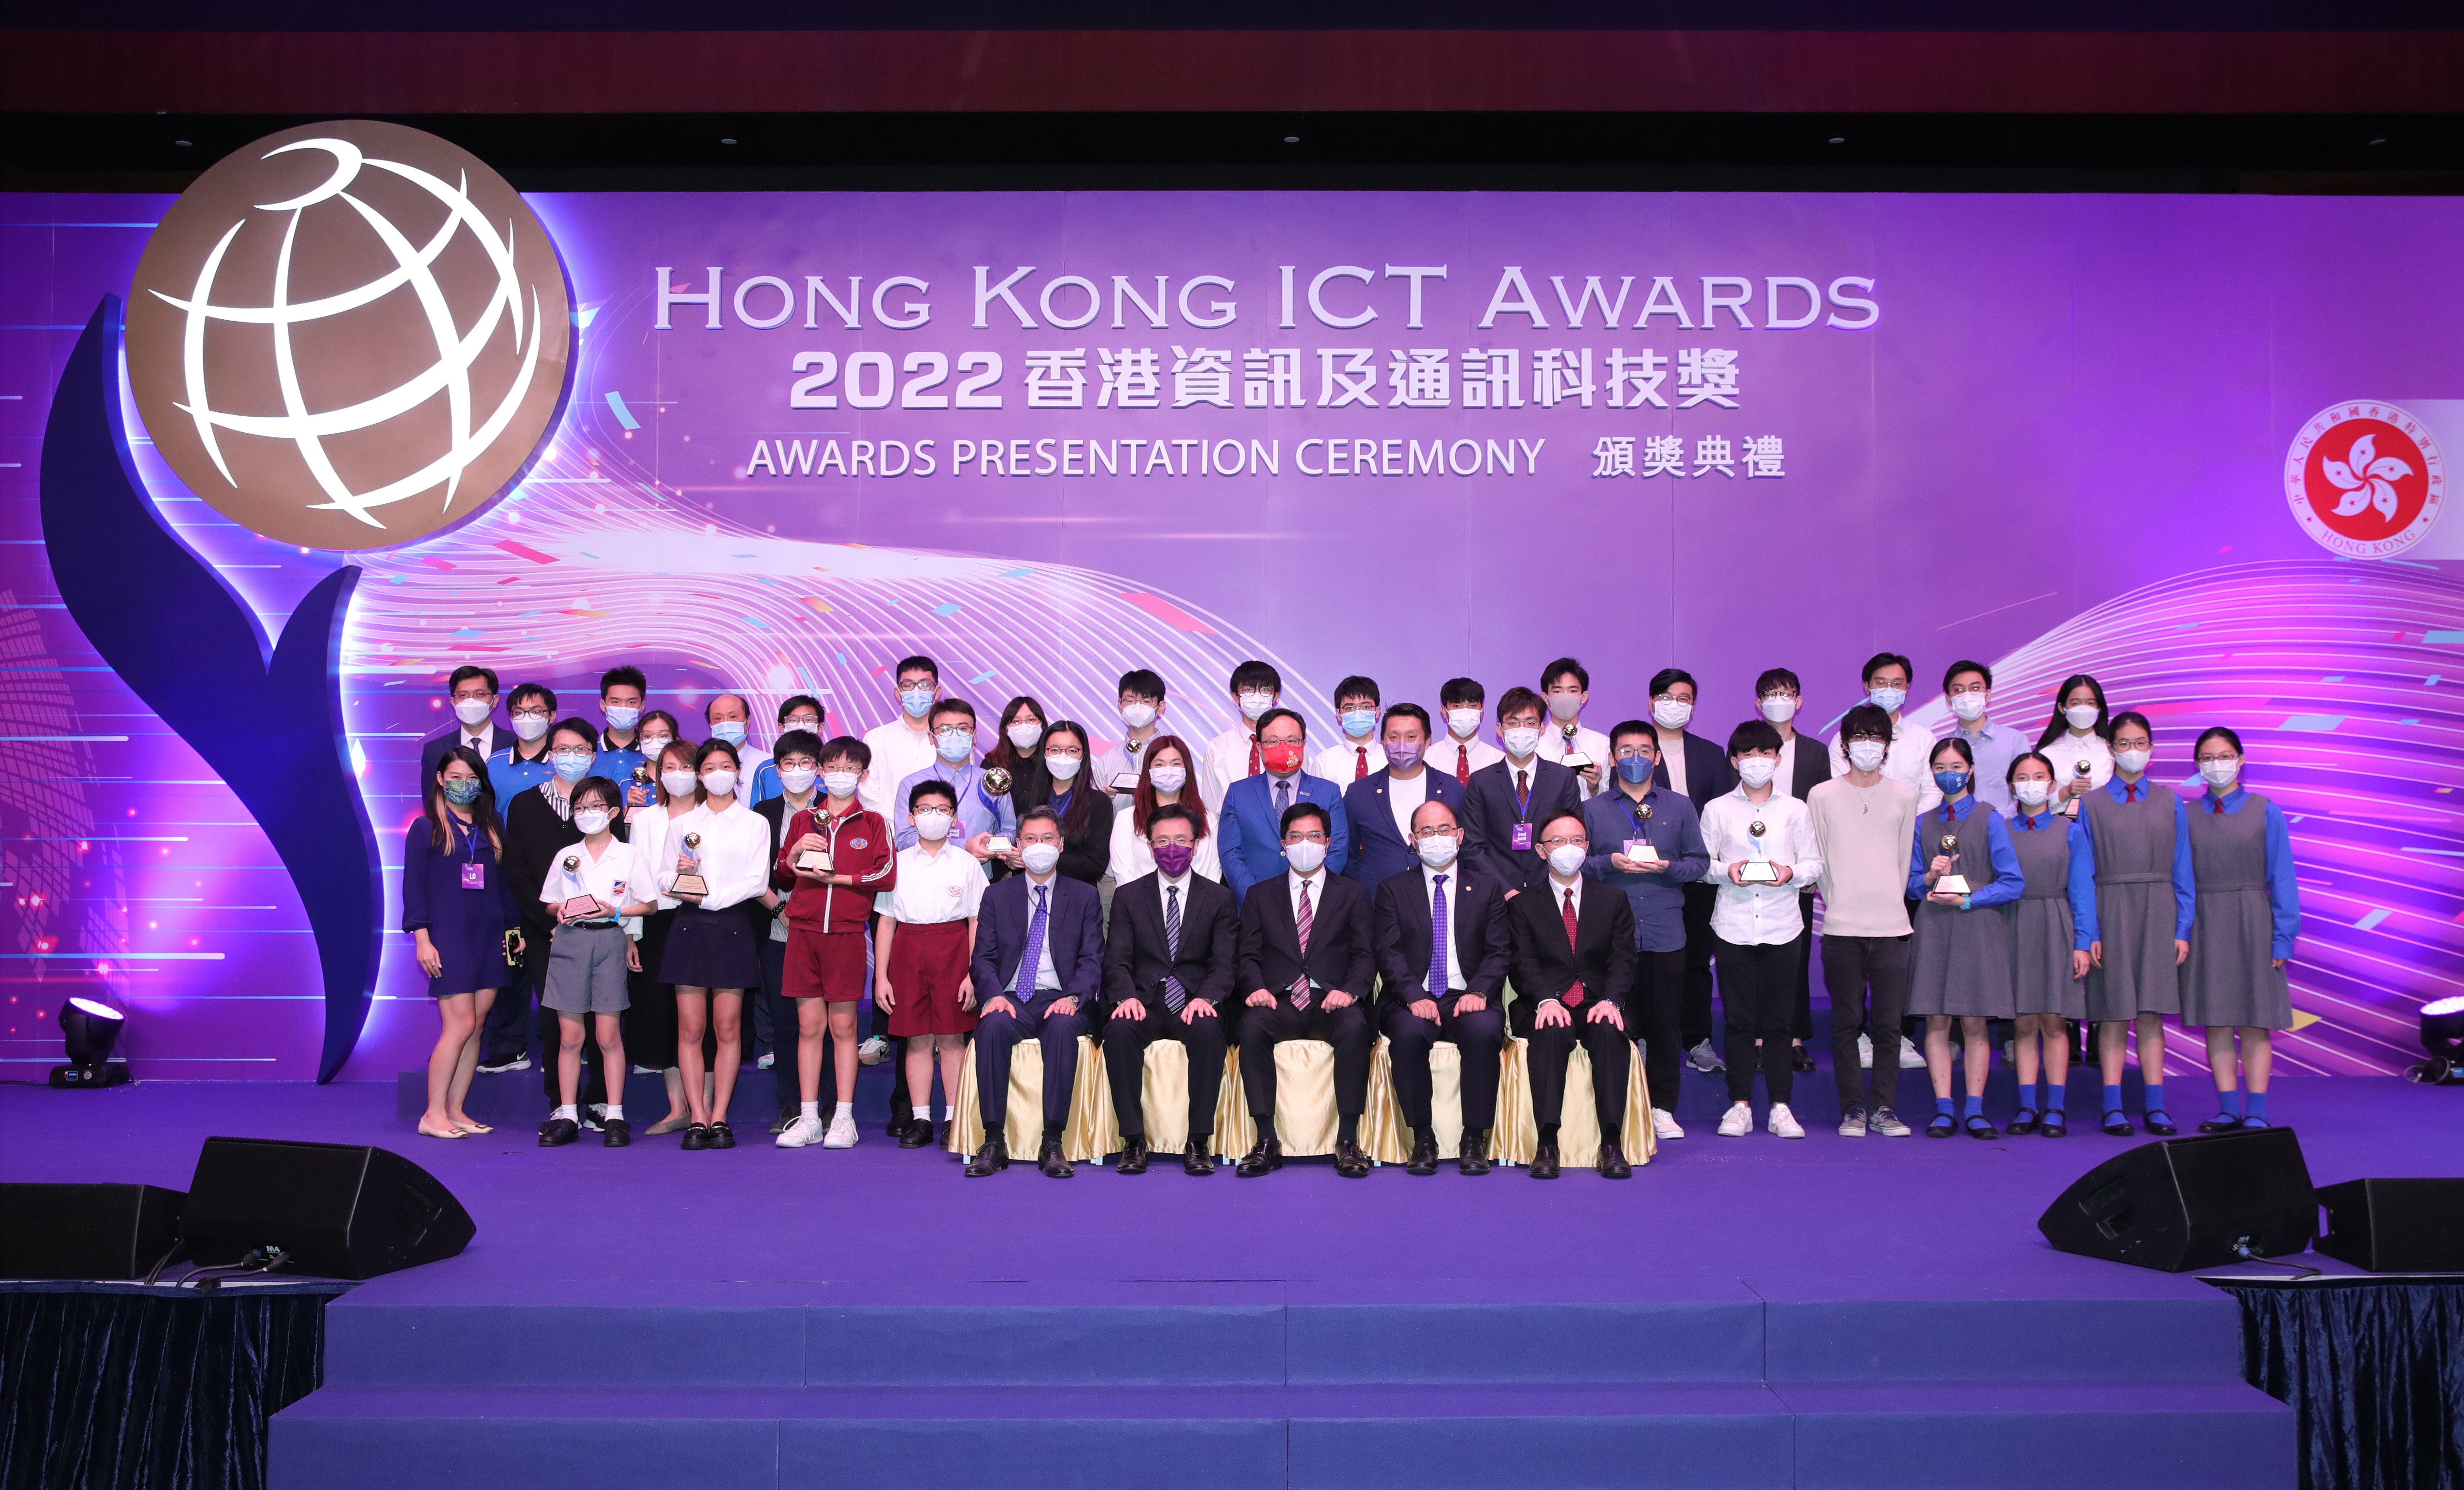 Hong Kong ICT Awards 2022 Student Innovation Award Winners Group Photo